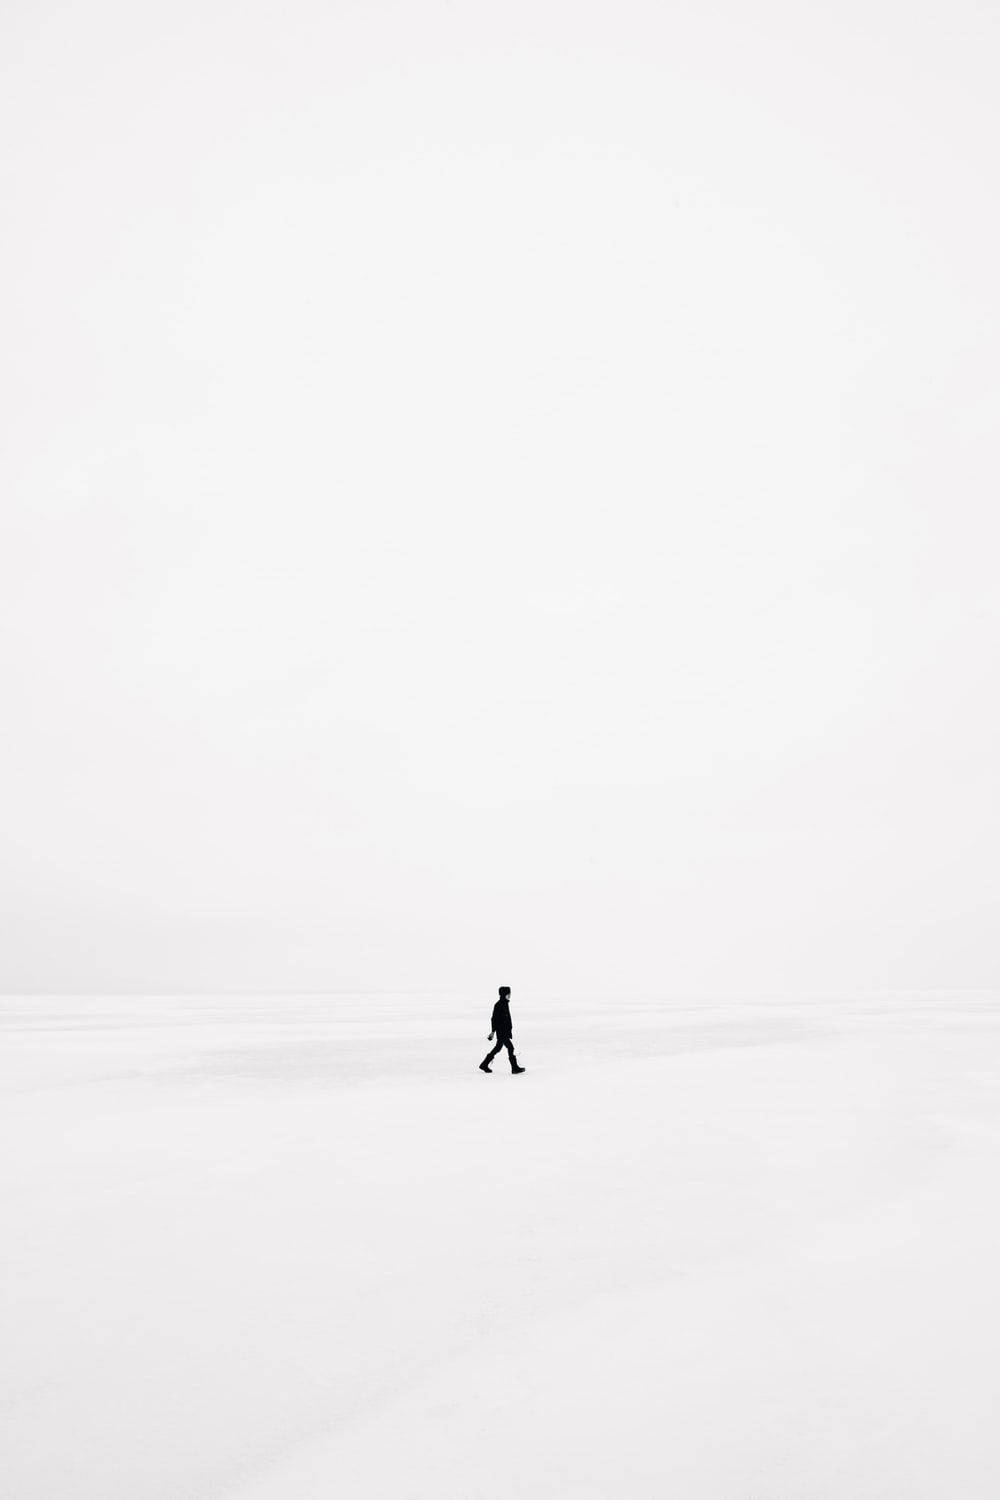 Walking Man White Minimalist Background